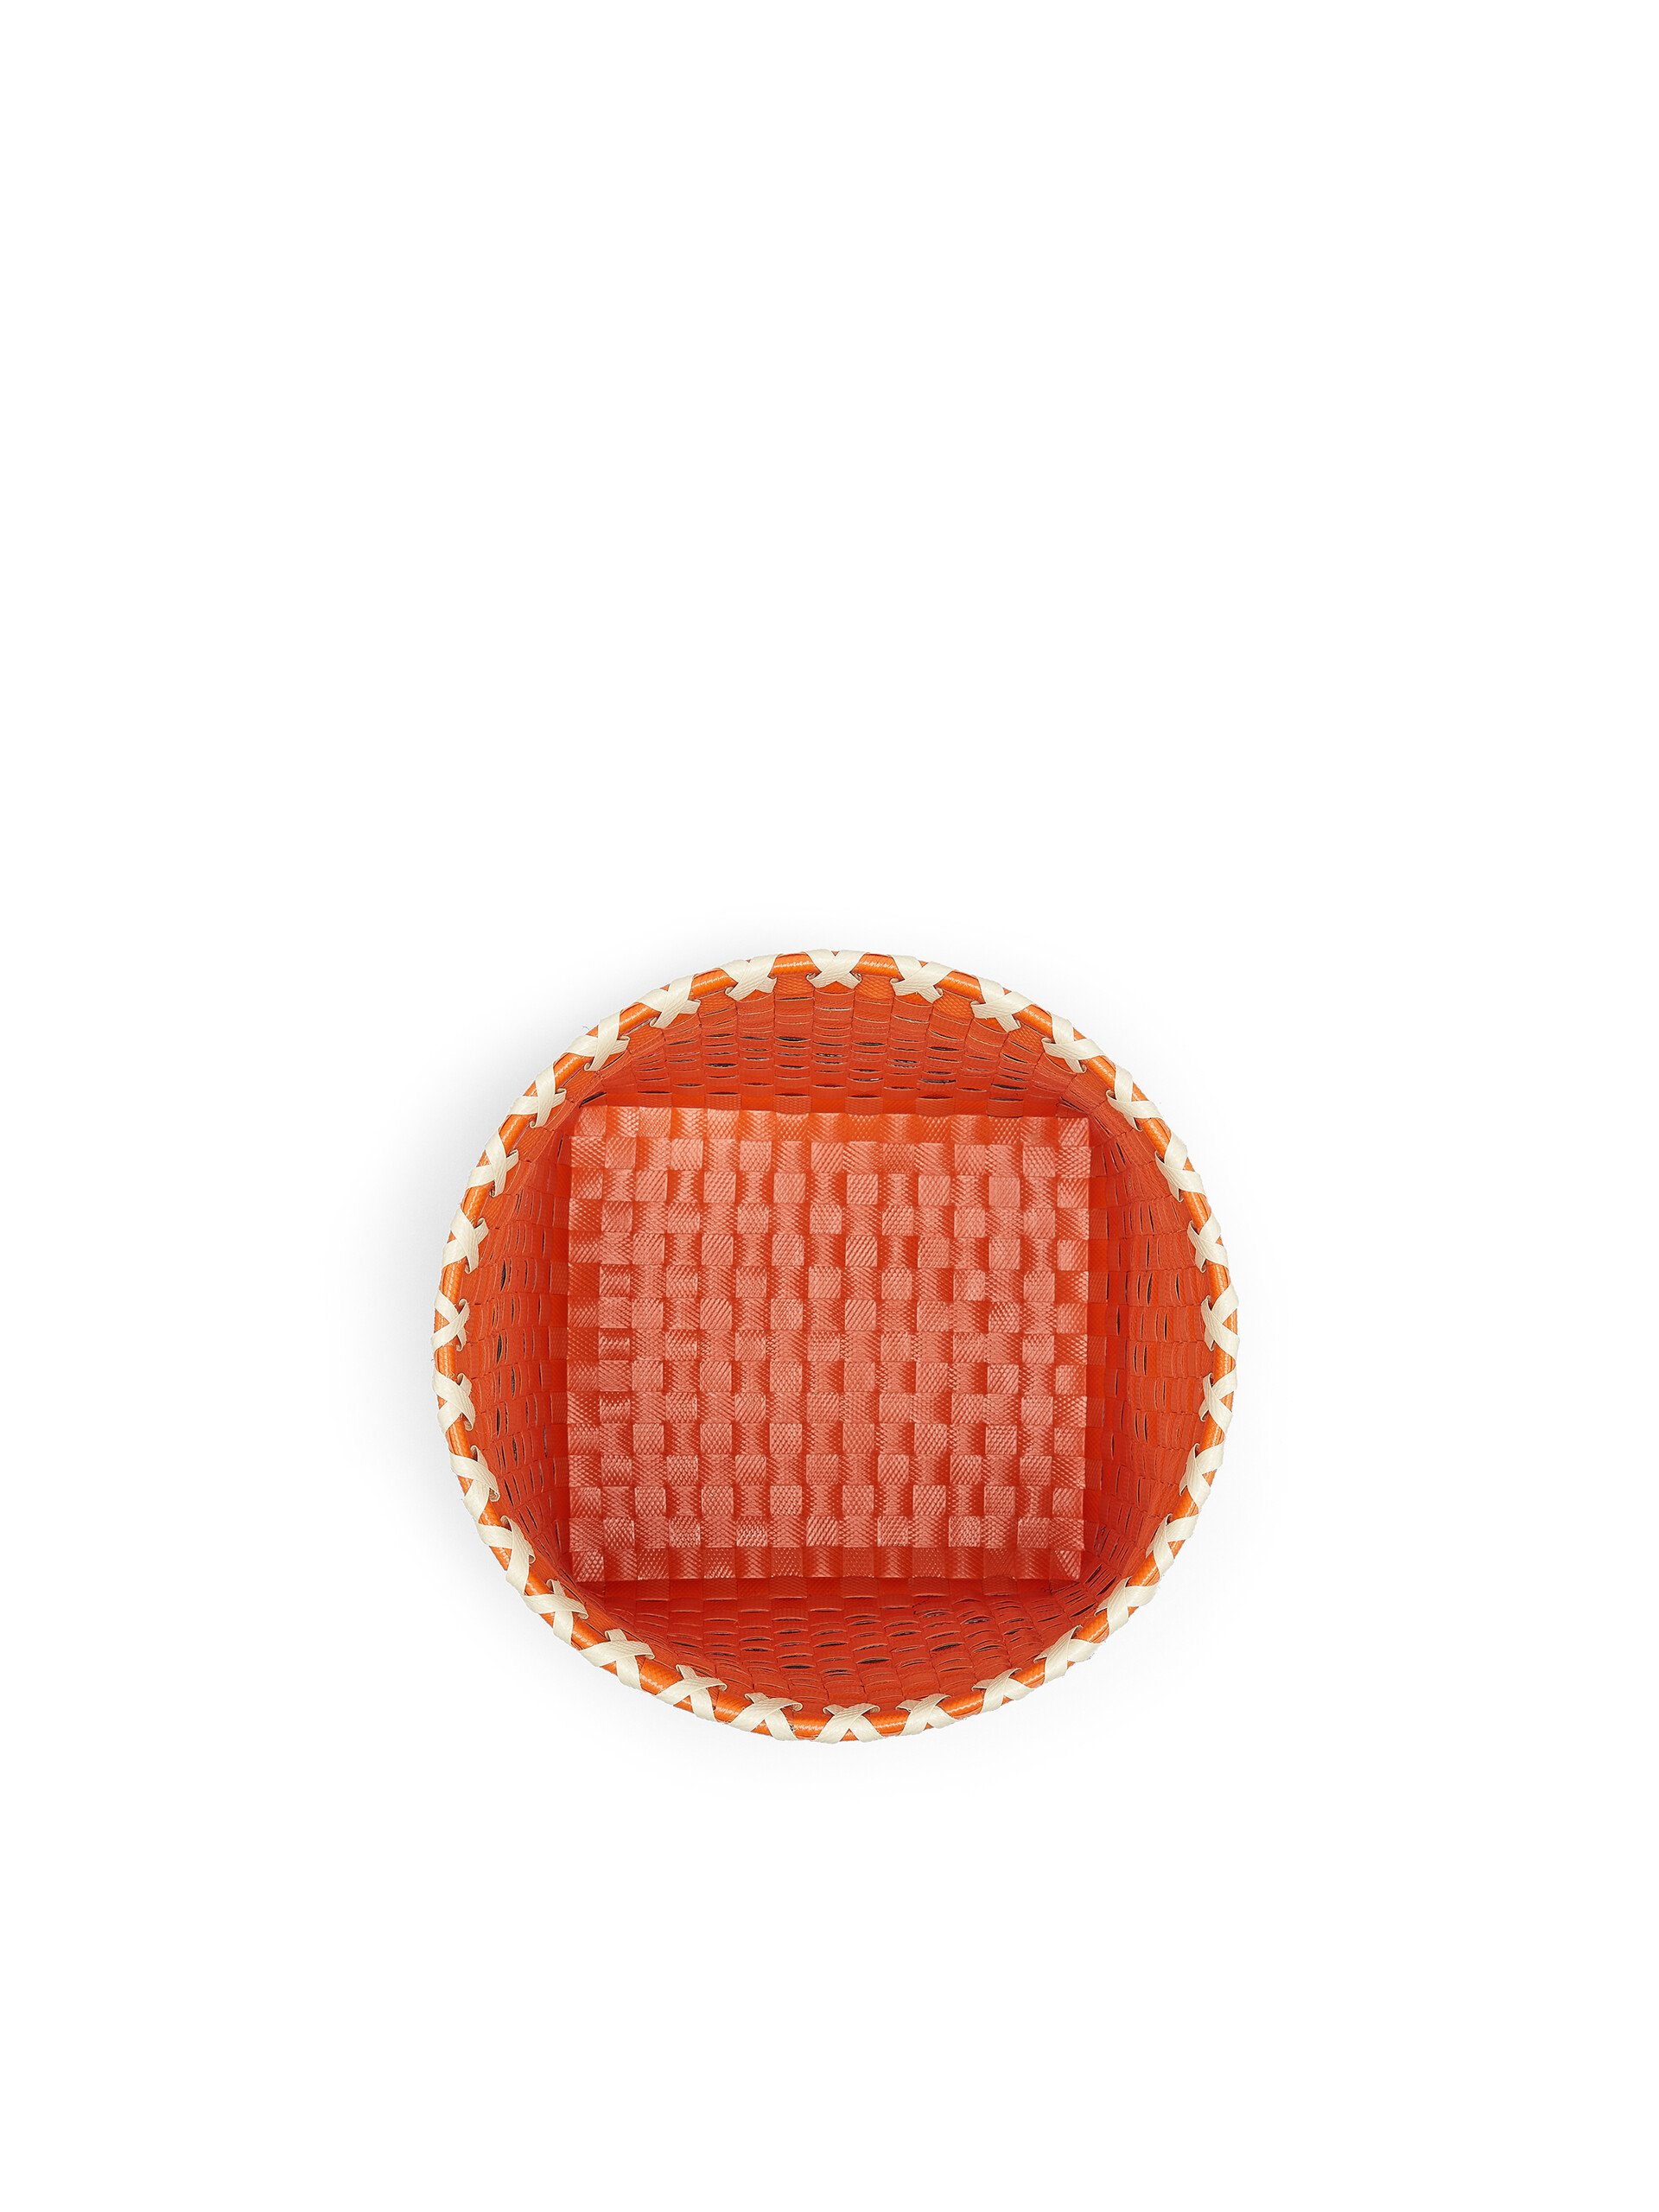 MARNI MARKET basket in orange black and white woven PVC - Home Accessories - Image 4